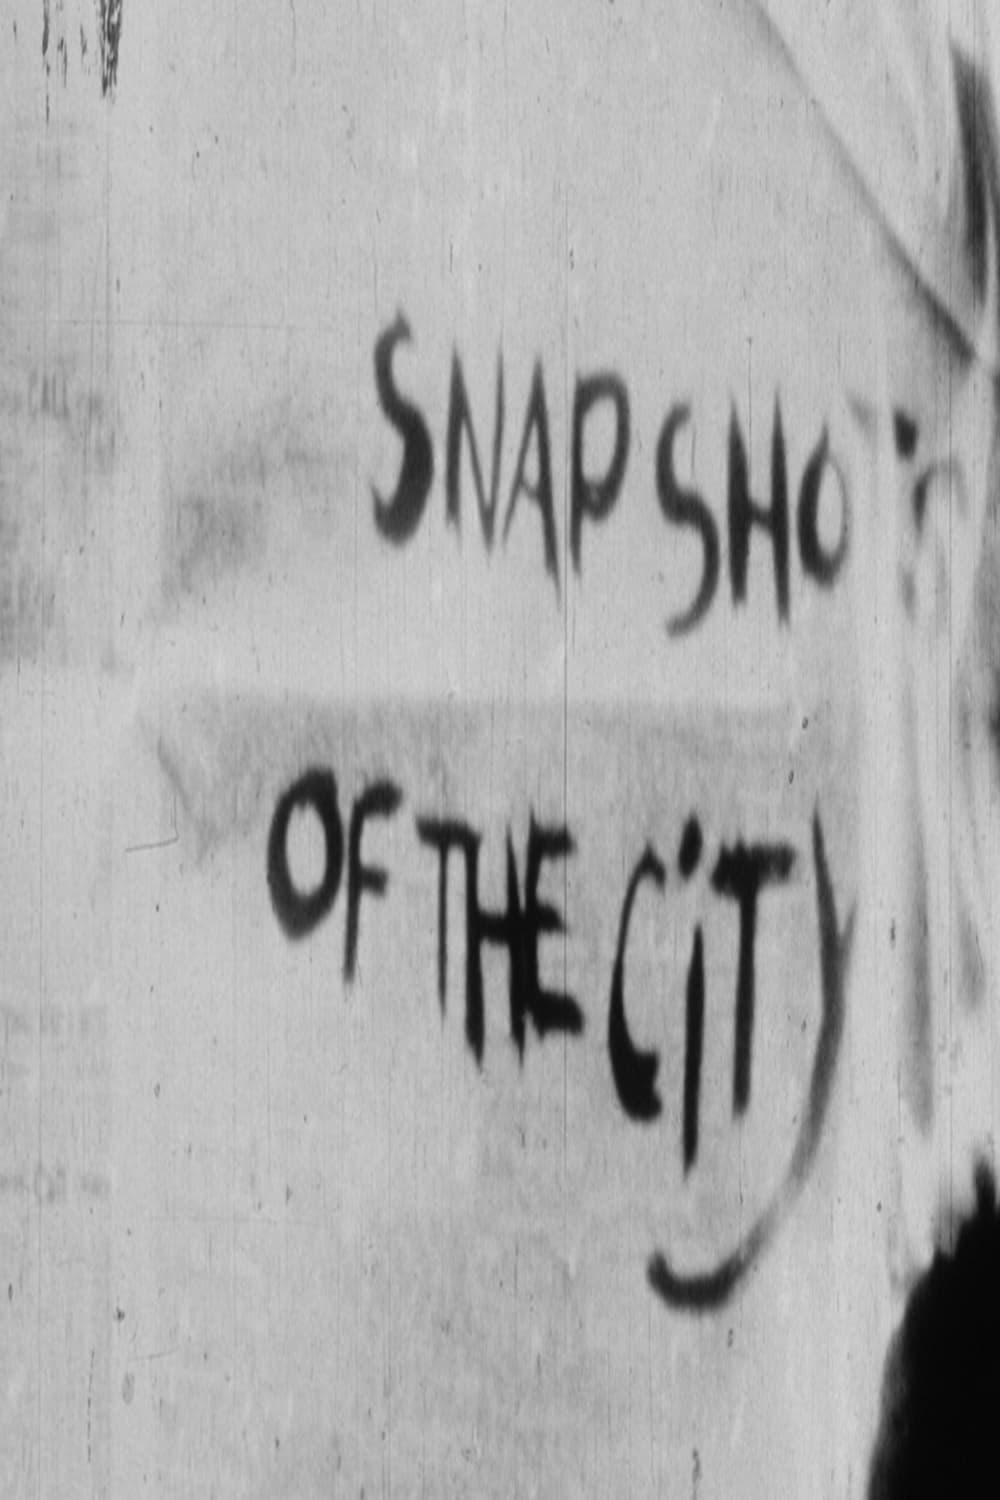 Snapshots of the City